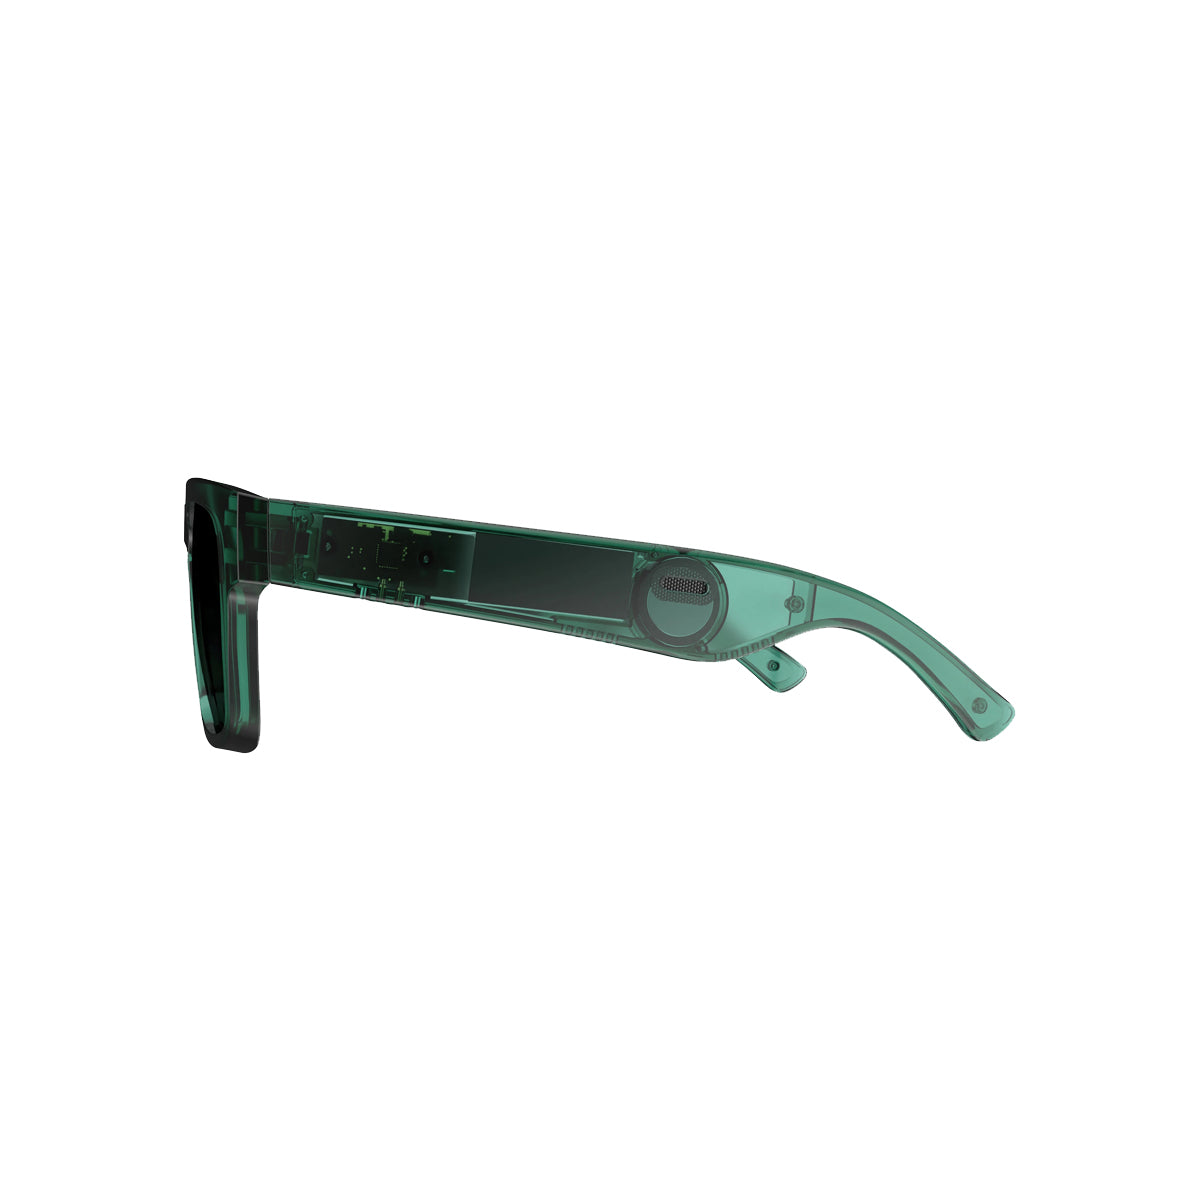 Solos Smart Audio Glasses, Jade Green | Rokit - Wake Concept Store  